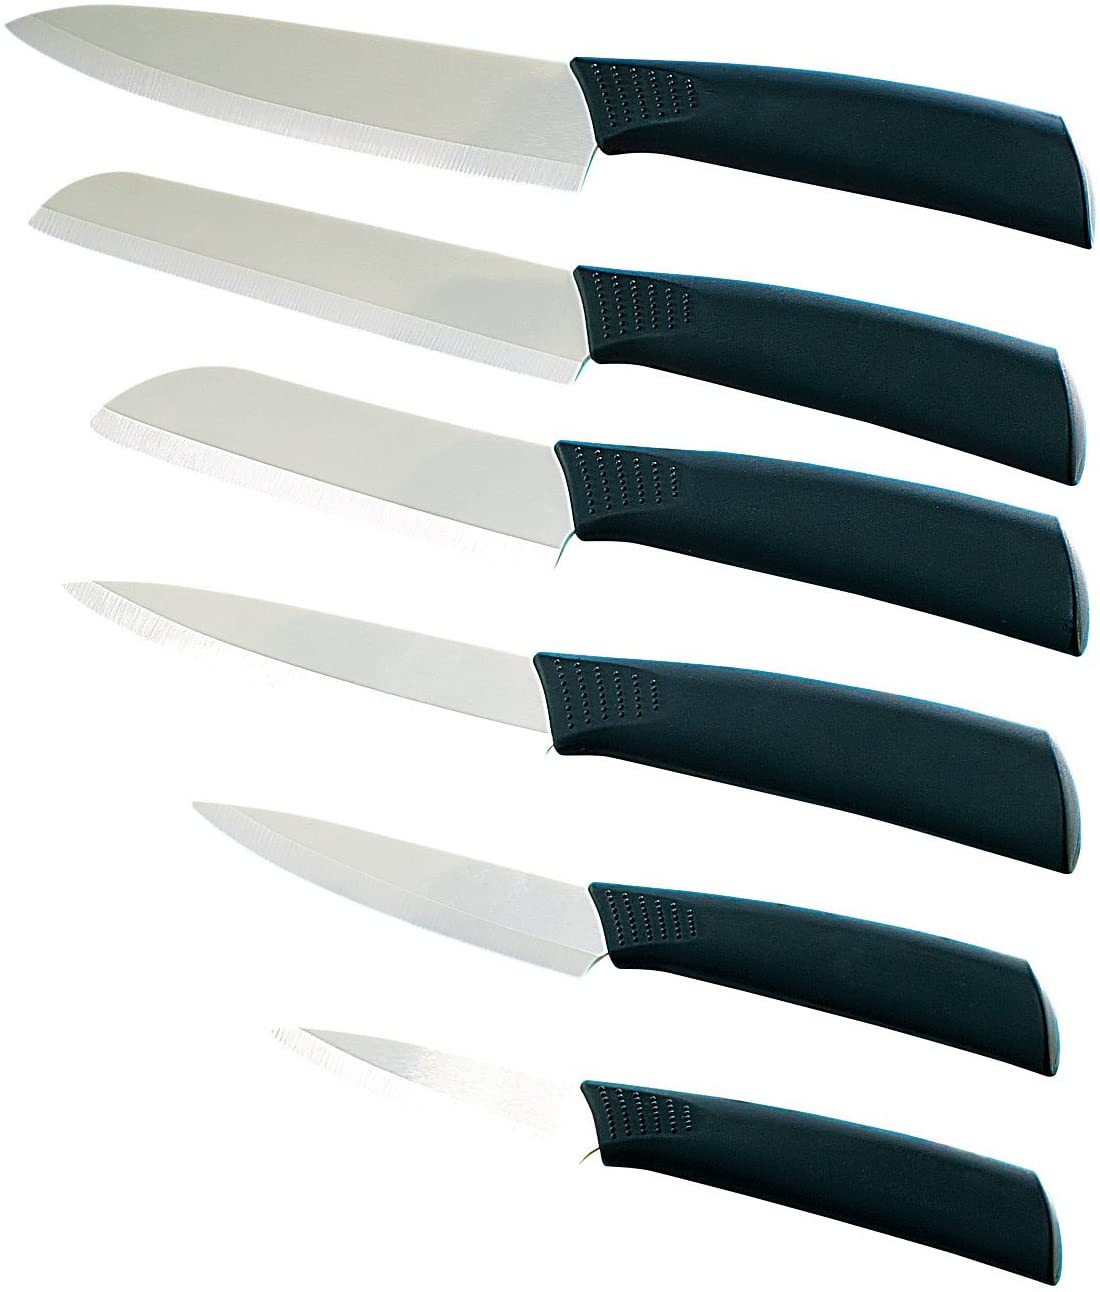 ROSENSTEIN & SOHNE Rosenstein & Söhne Ceramic knife set: ceramic knife complete set of 6 (ceramic knife set).